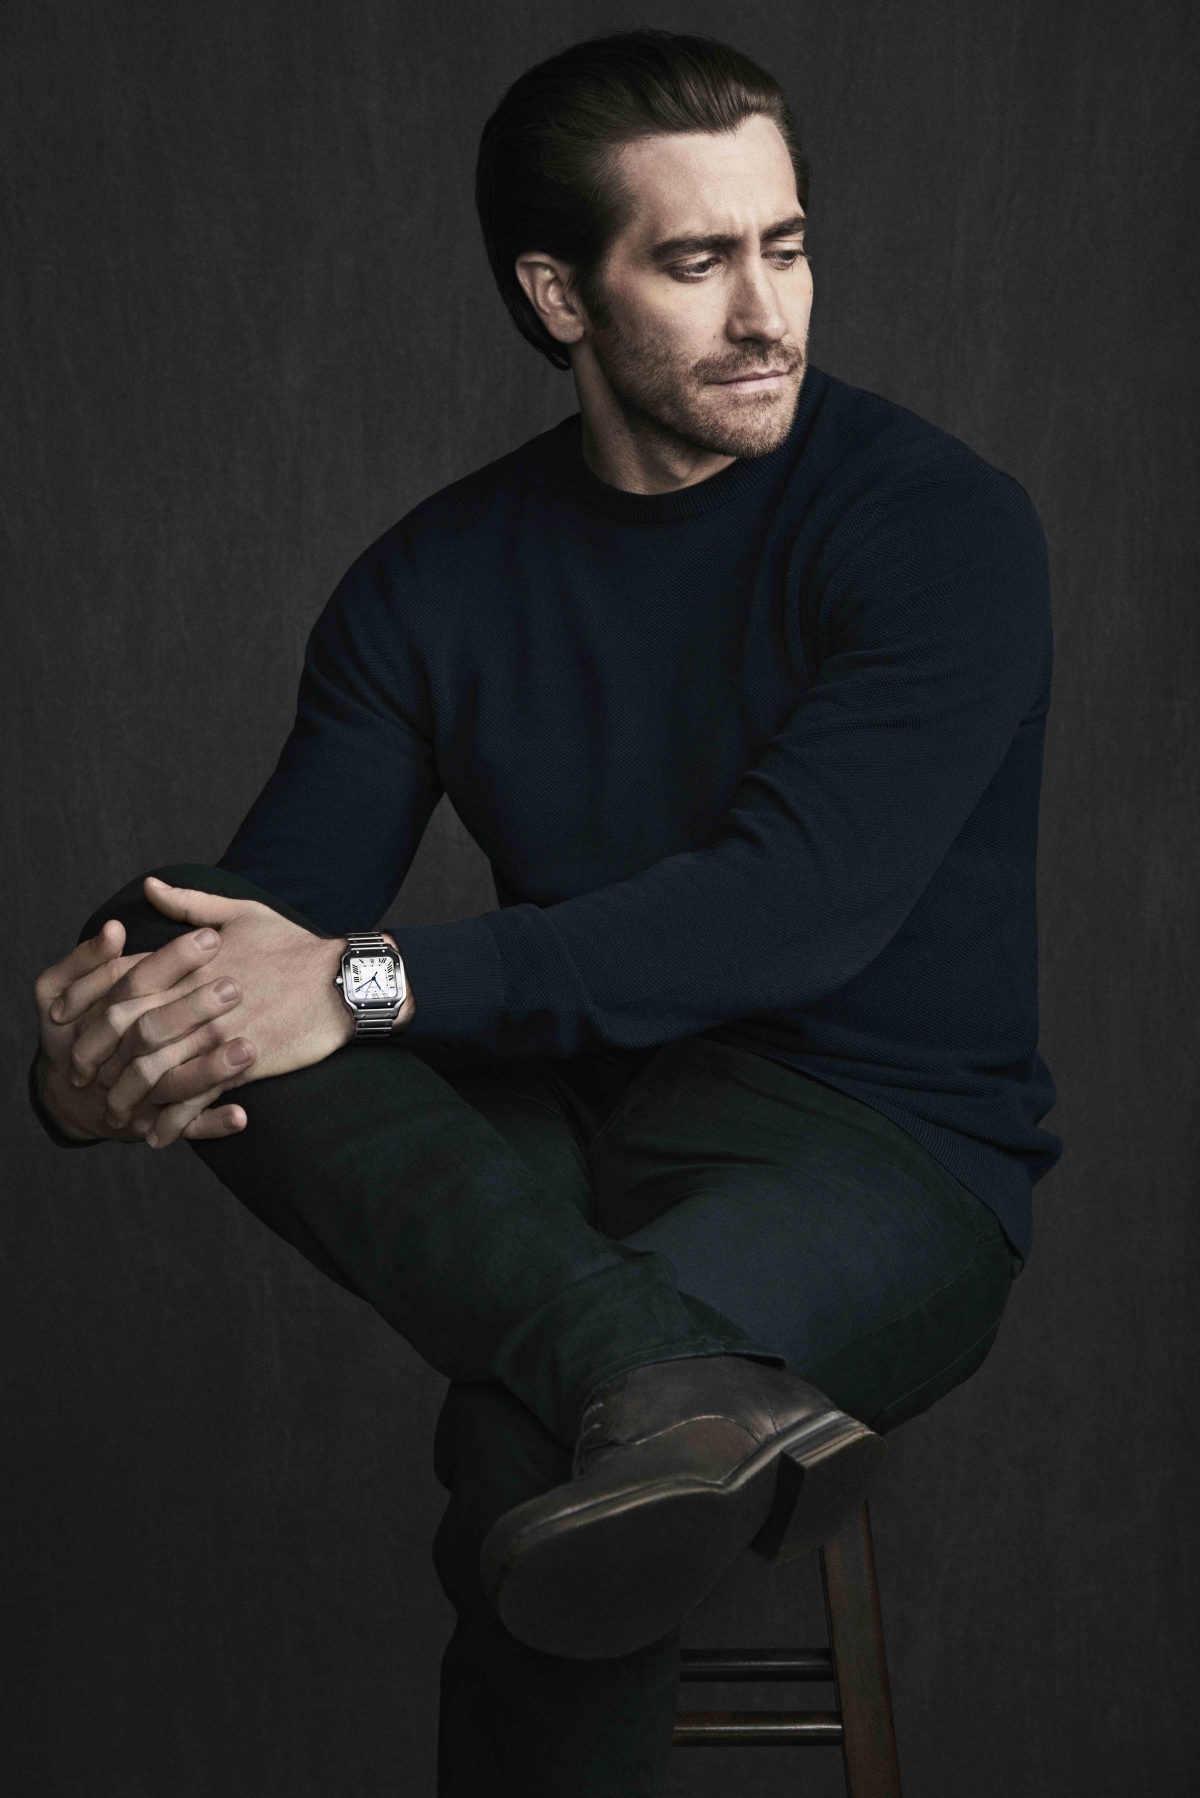 1MB_Jake Gyllenhaal - Matthew Brookes@Cartier (002)